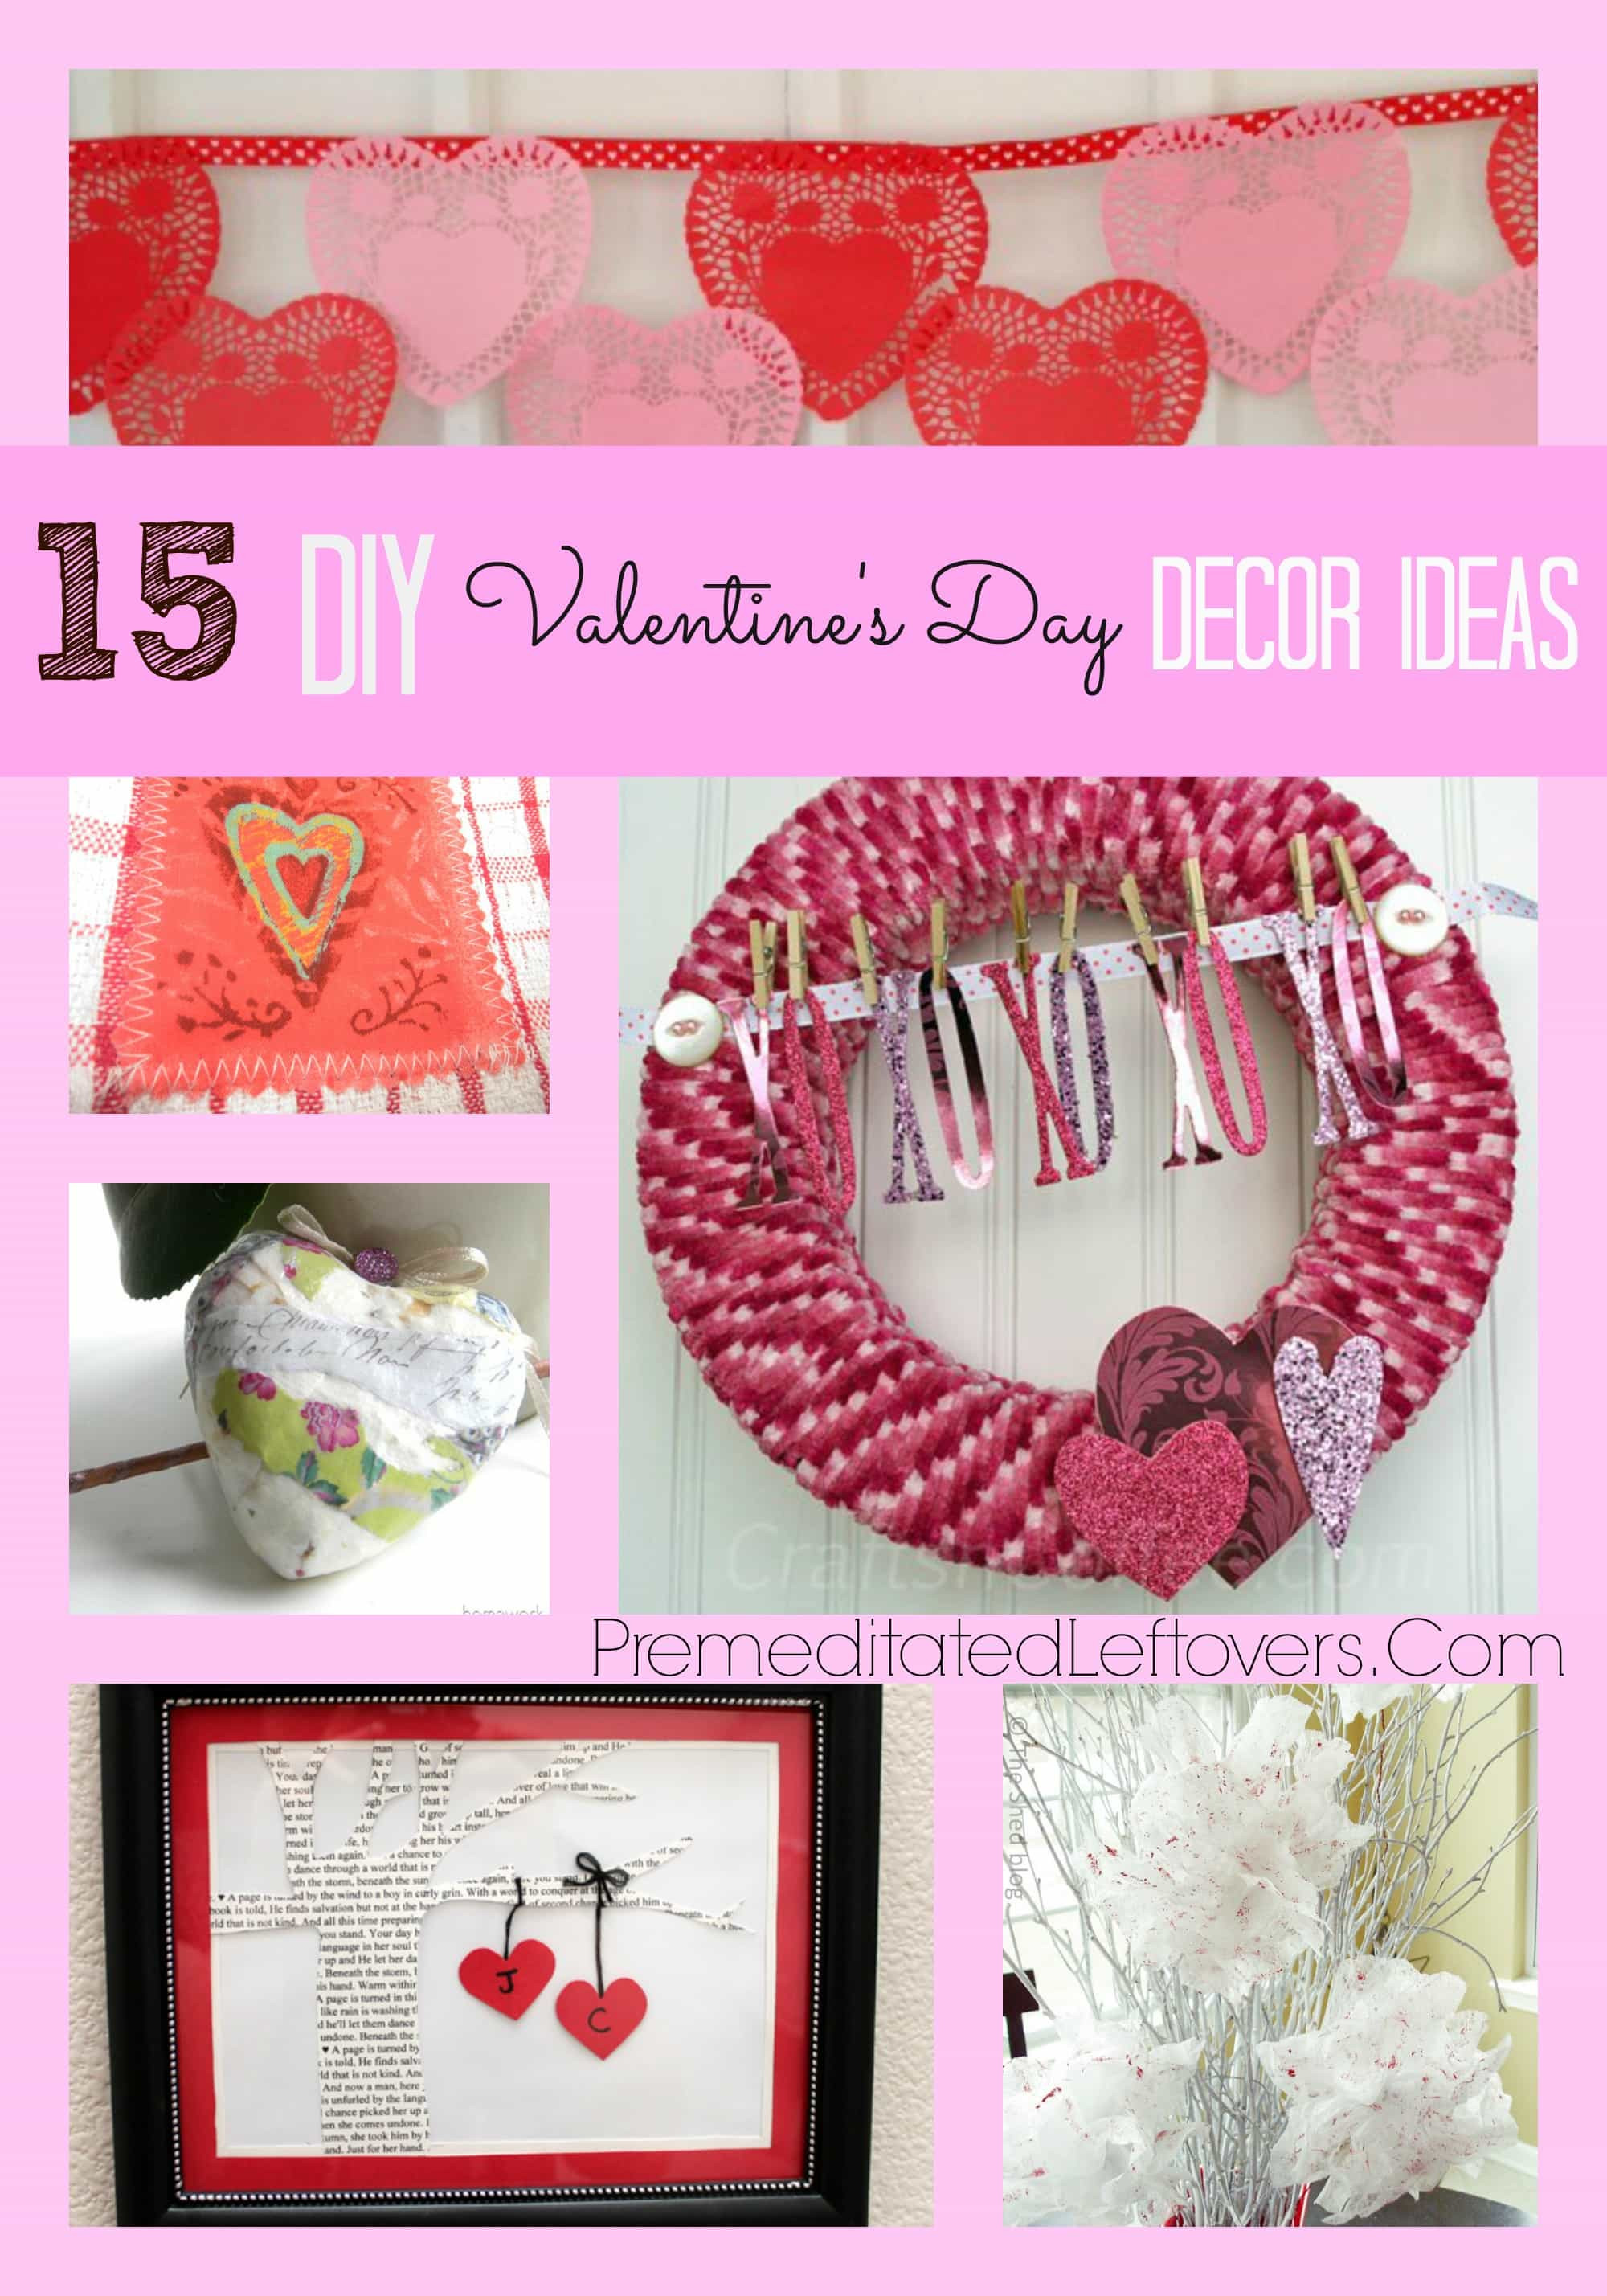 Best ideas about DIY Valentine Day
. Save or Pin 15 DIY Valentine s Day Decor Ideas Now.